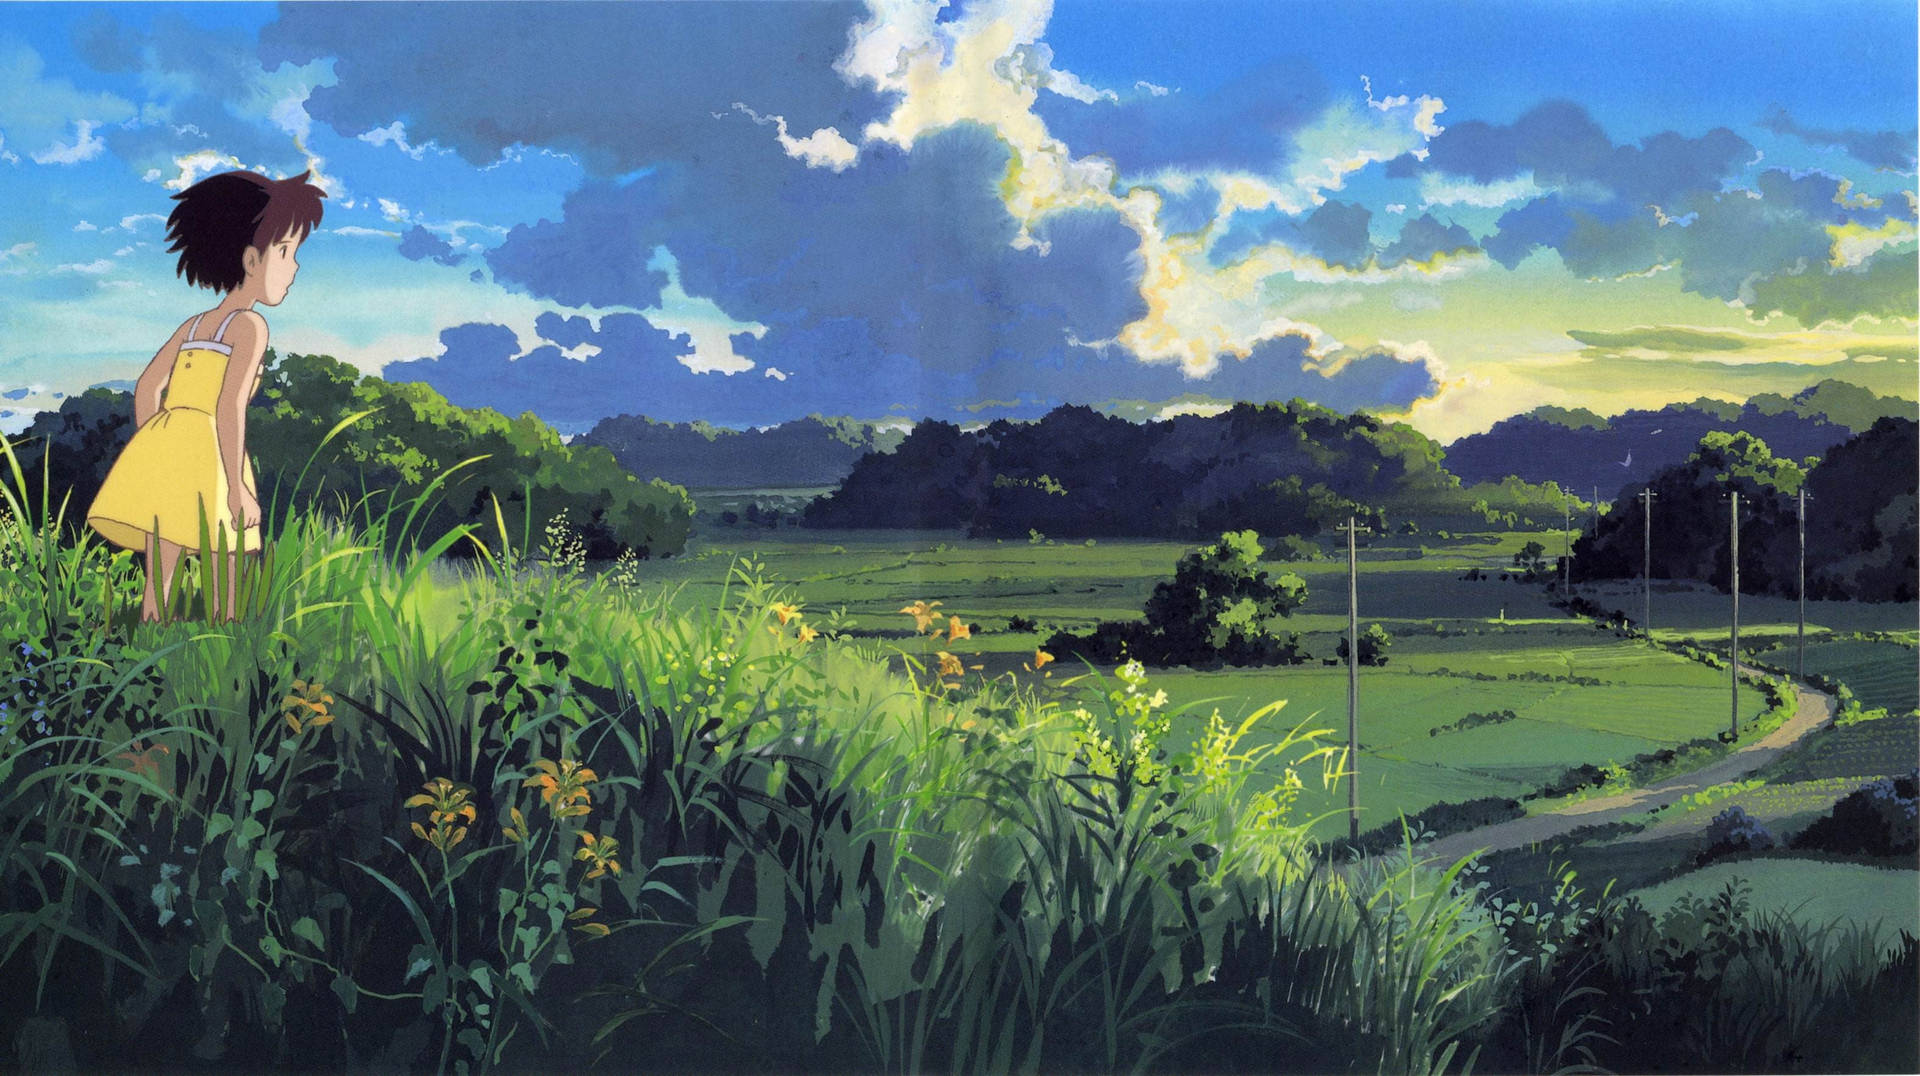 Studio Ghibli Scenery Girl In Field Background